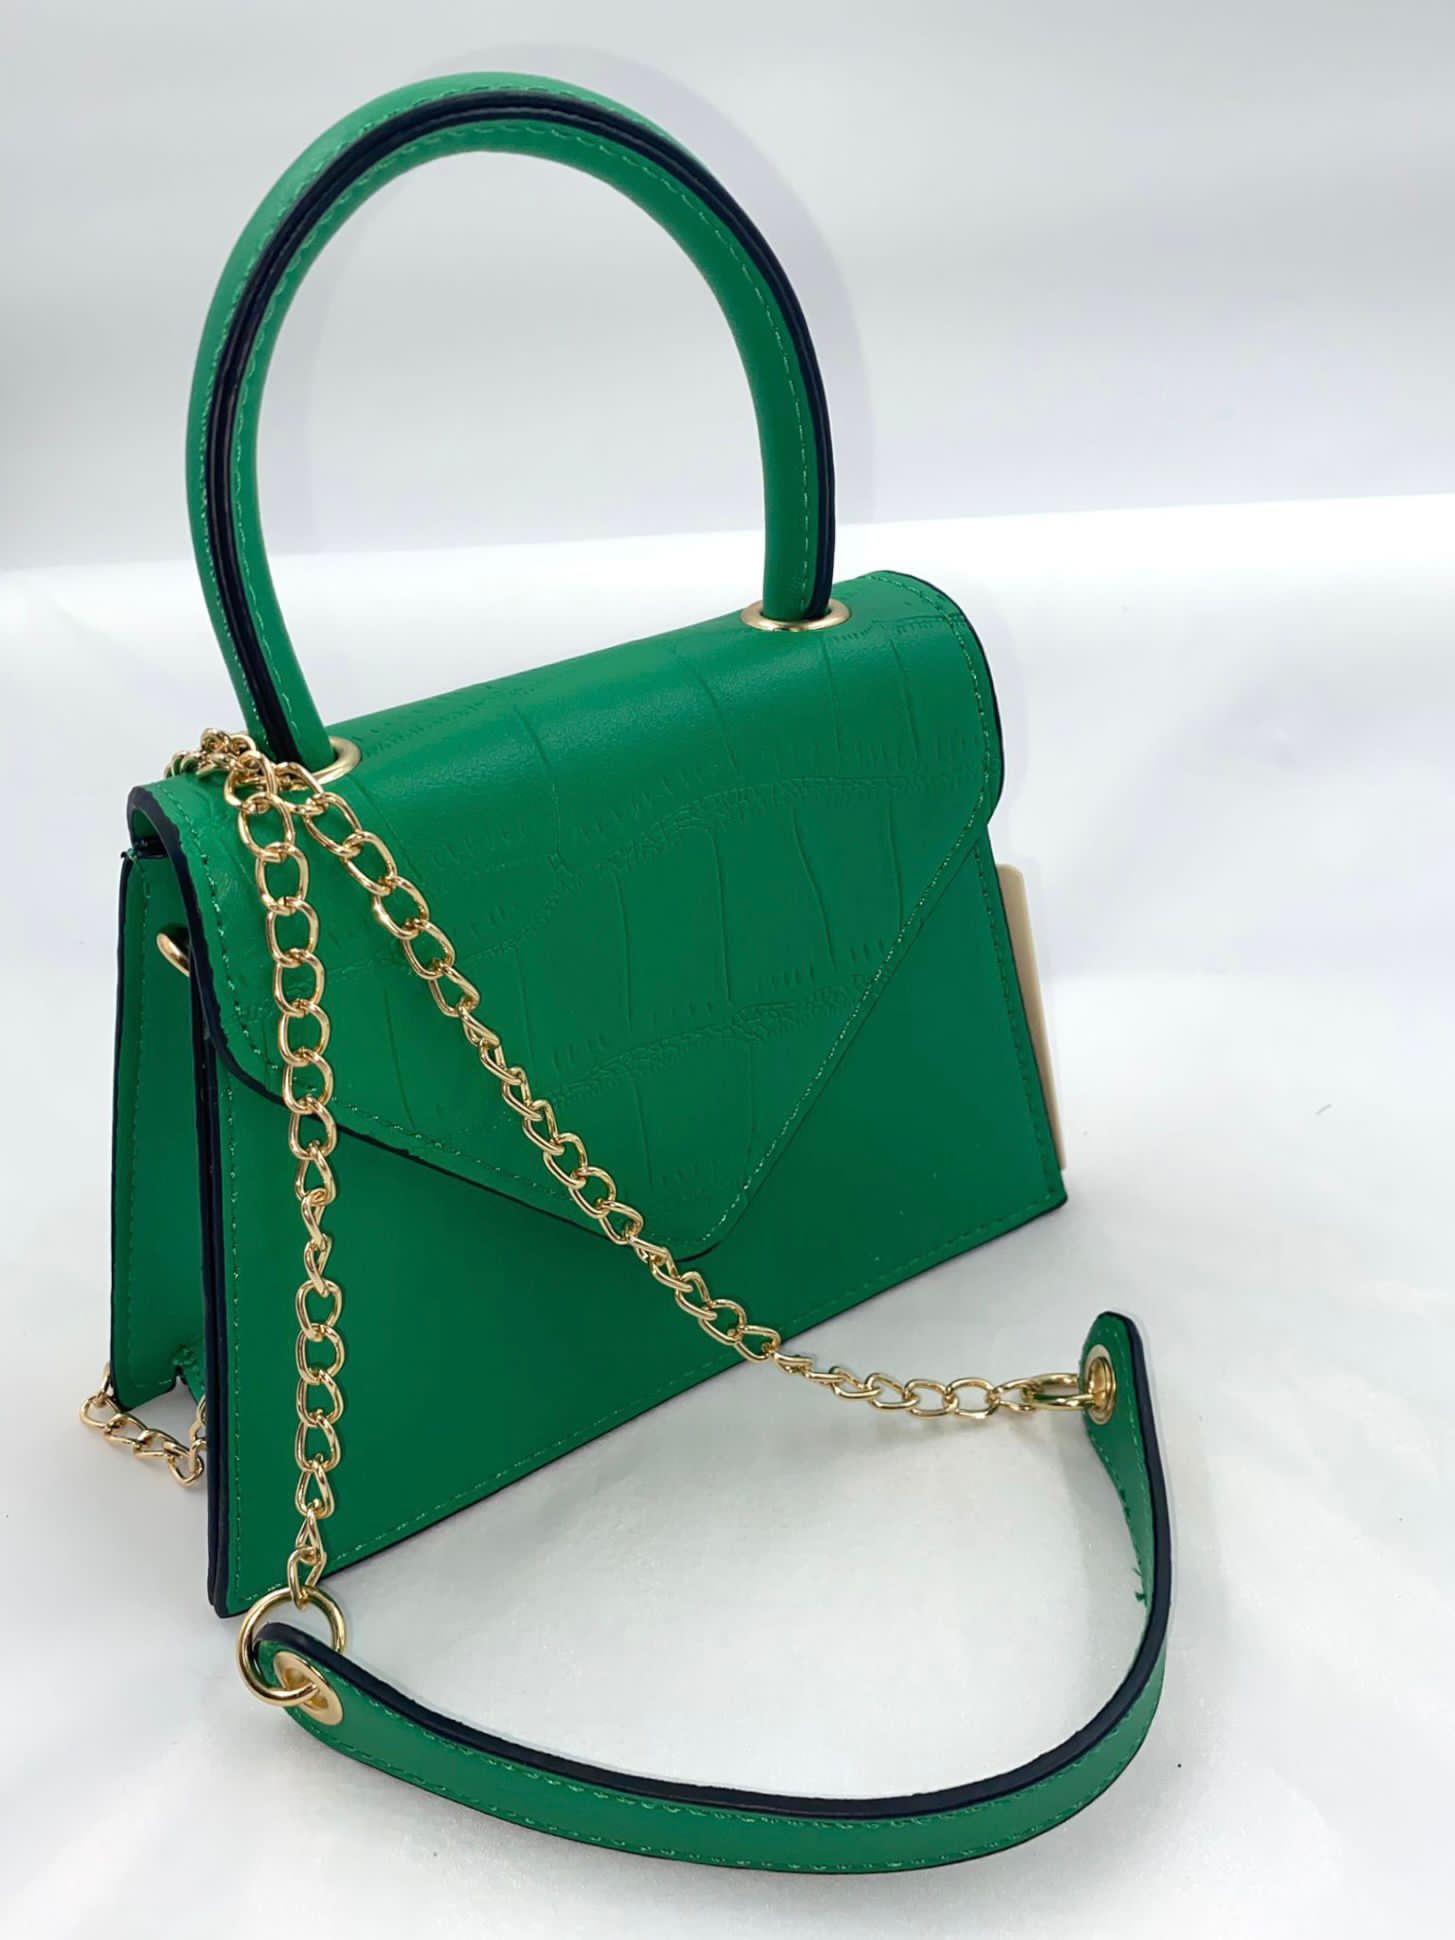 green bag 